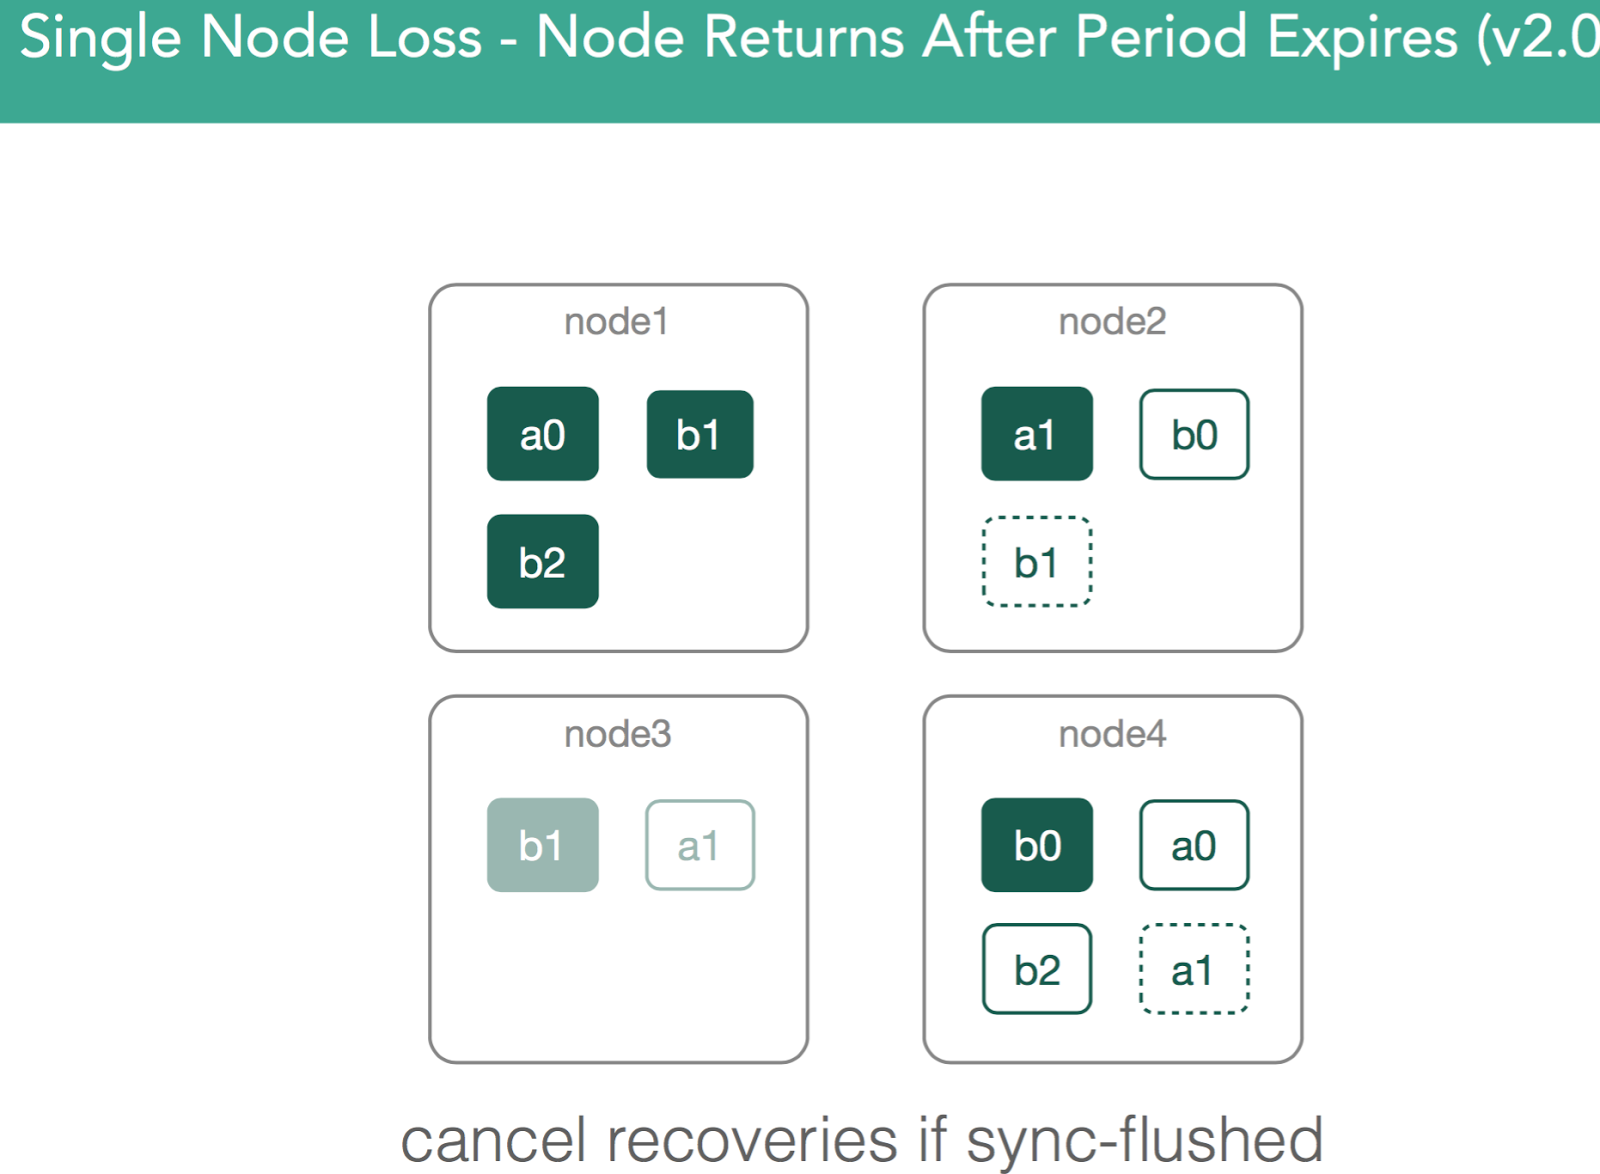 Single Node Loss - Node Returns After Period Expires (v2.0)